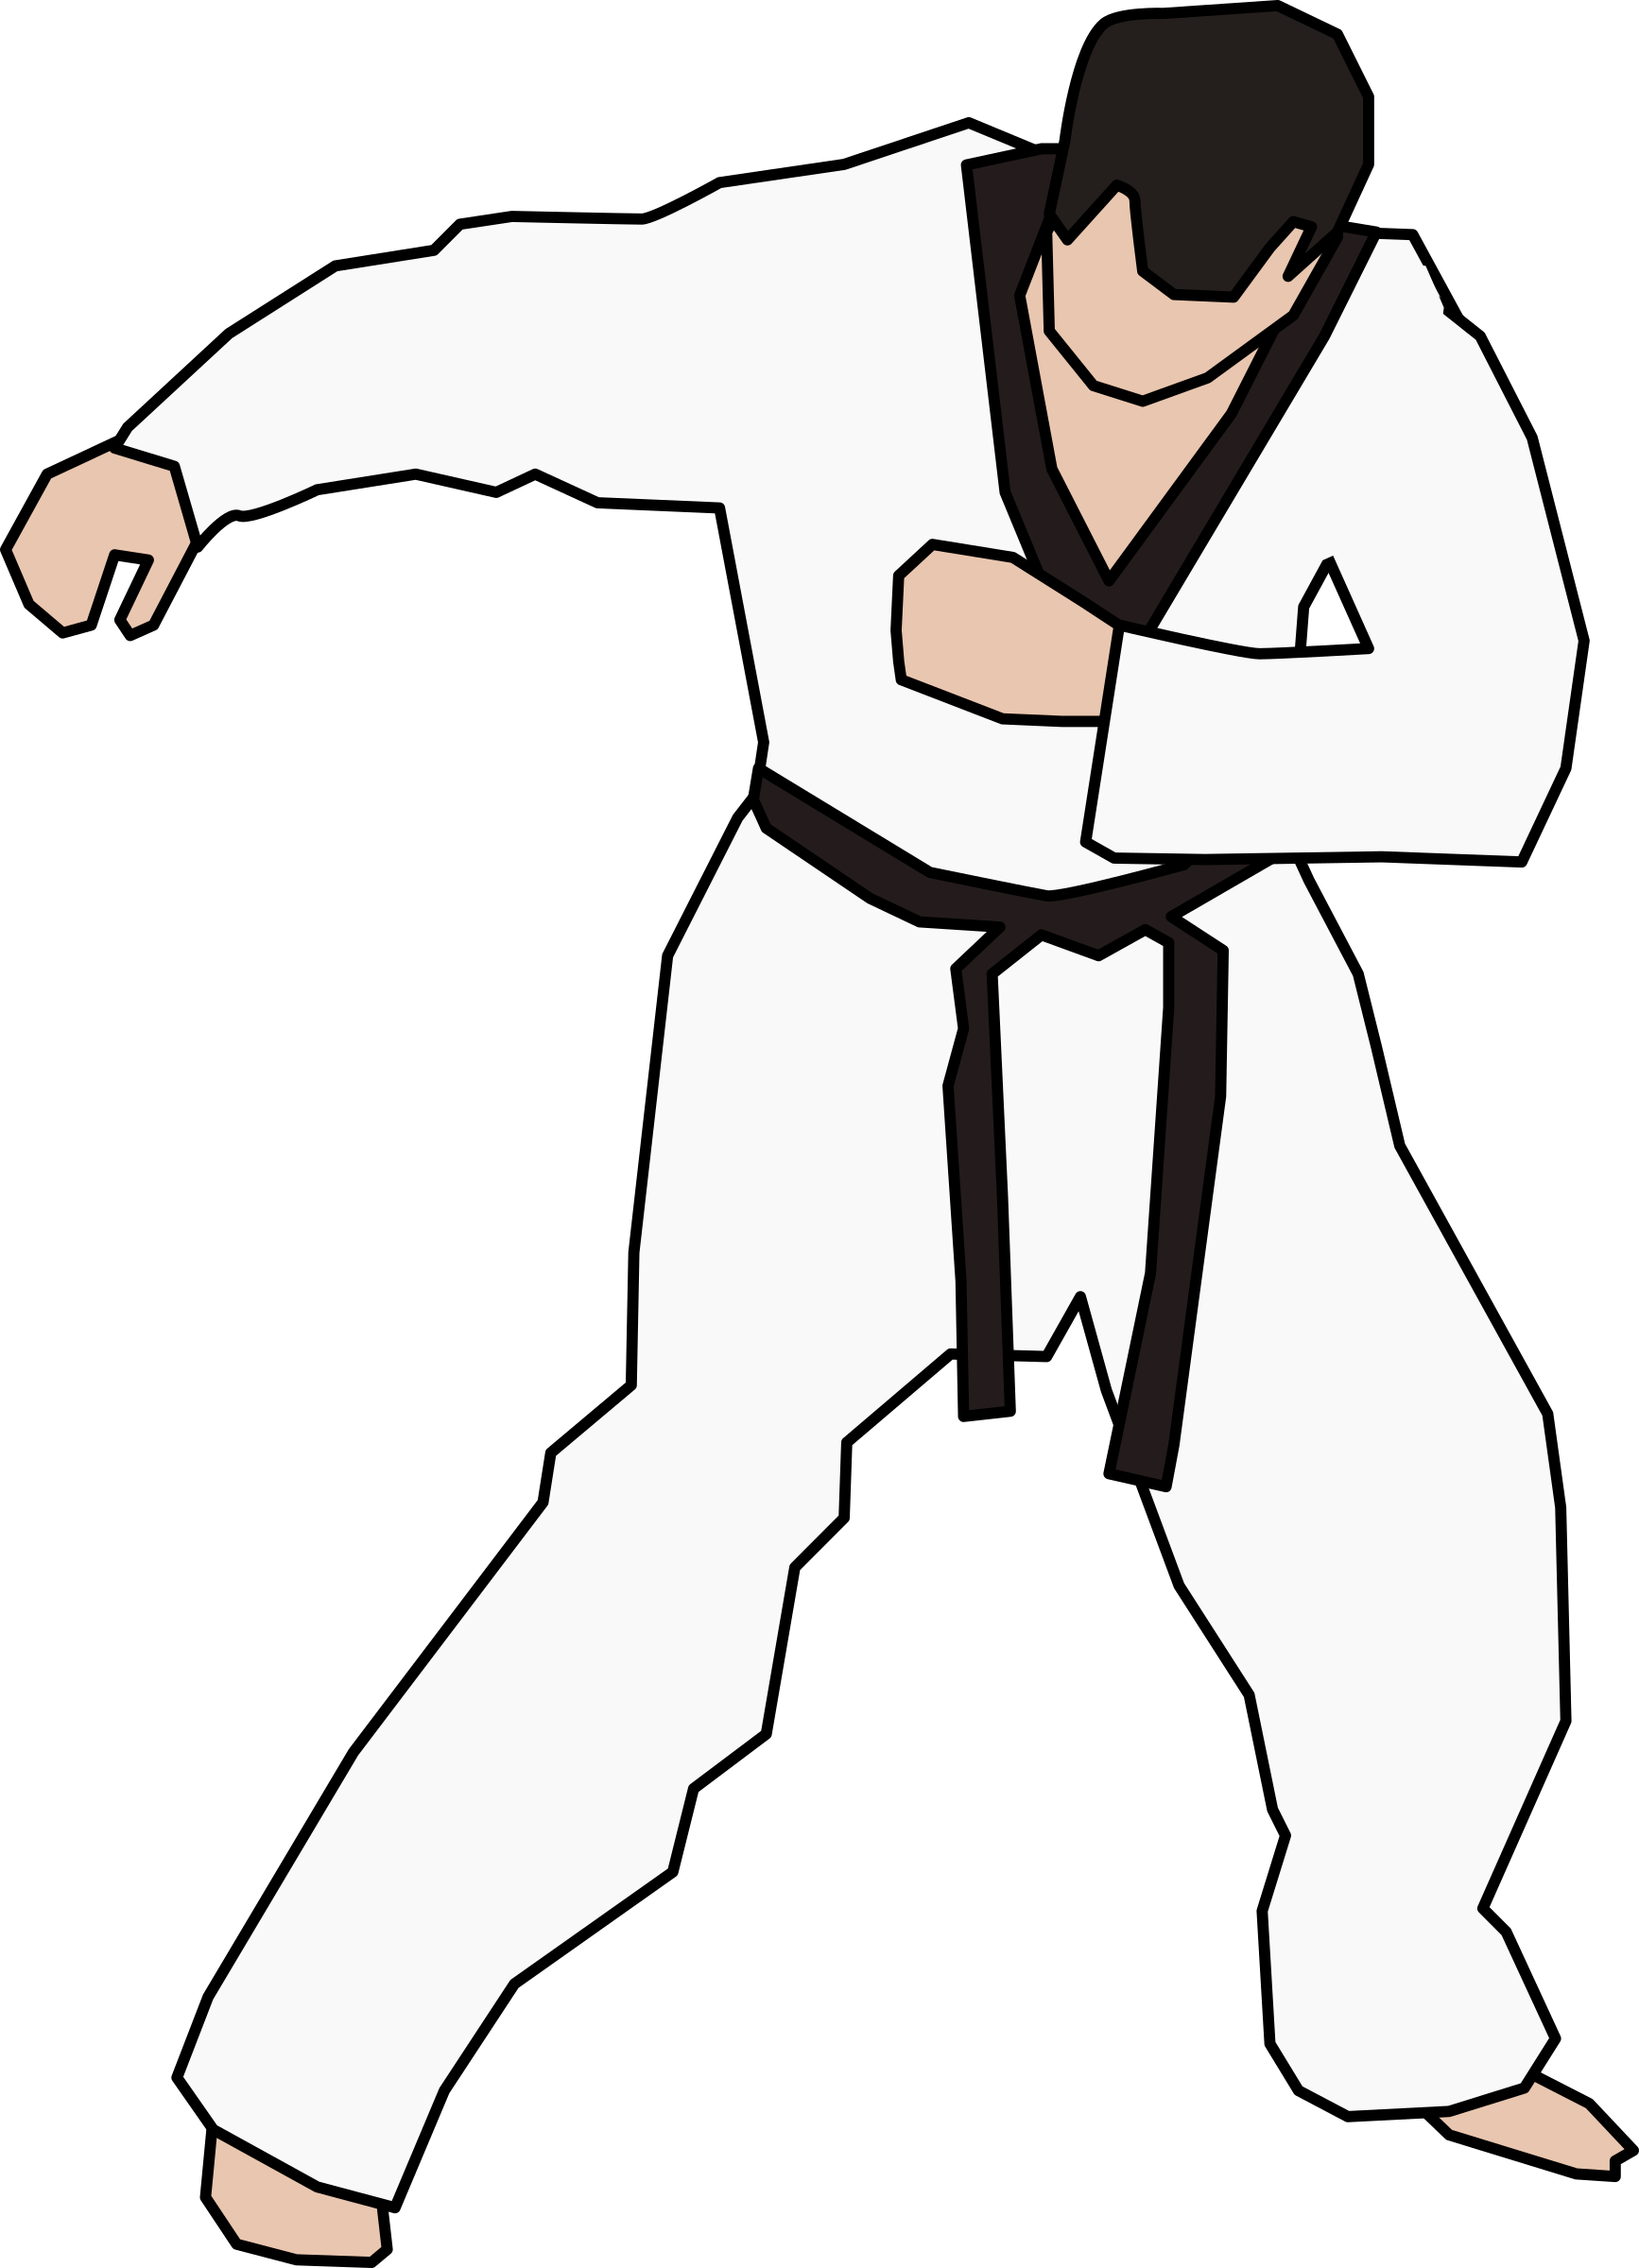 Black Belt Exercise Karate Korea Martial Art - Jiu Jitsu For Beginners Ebook (1734x2400)